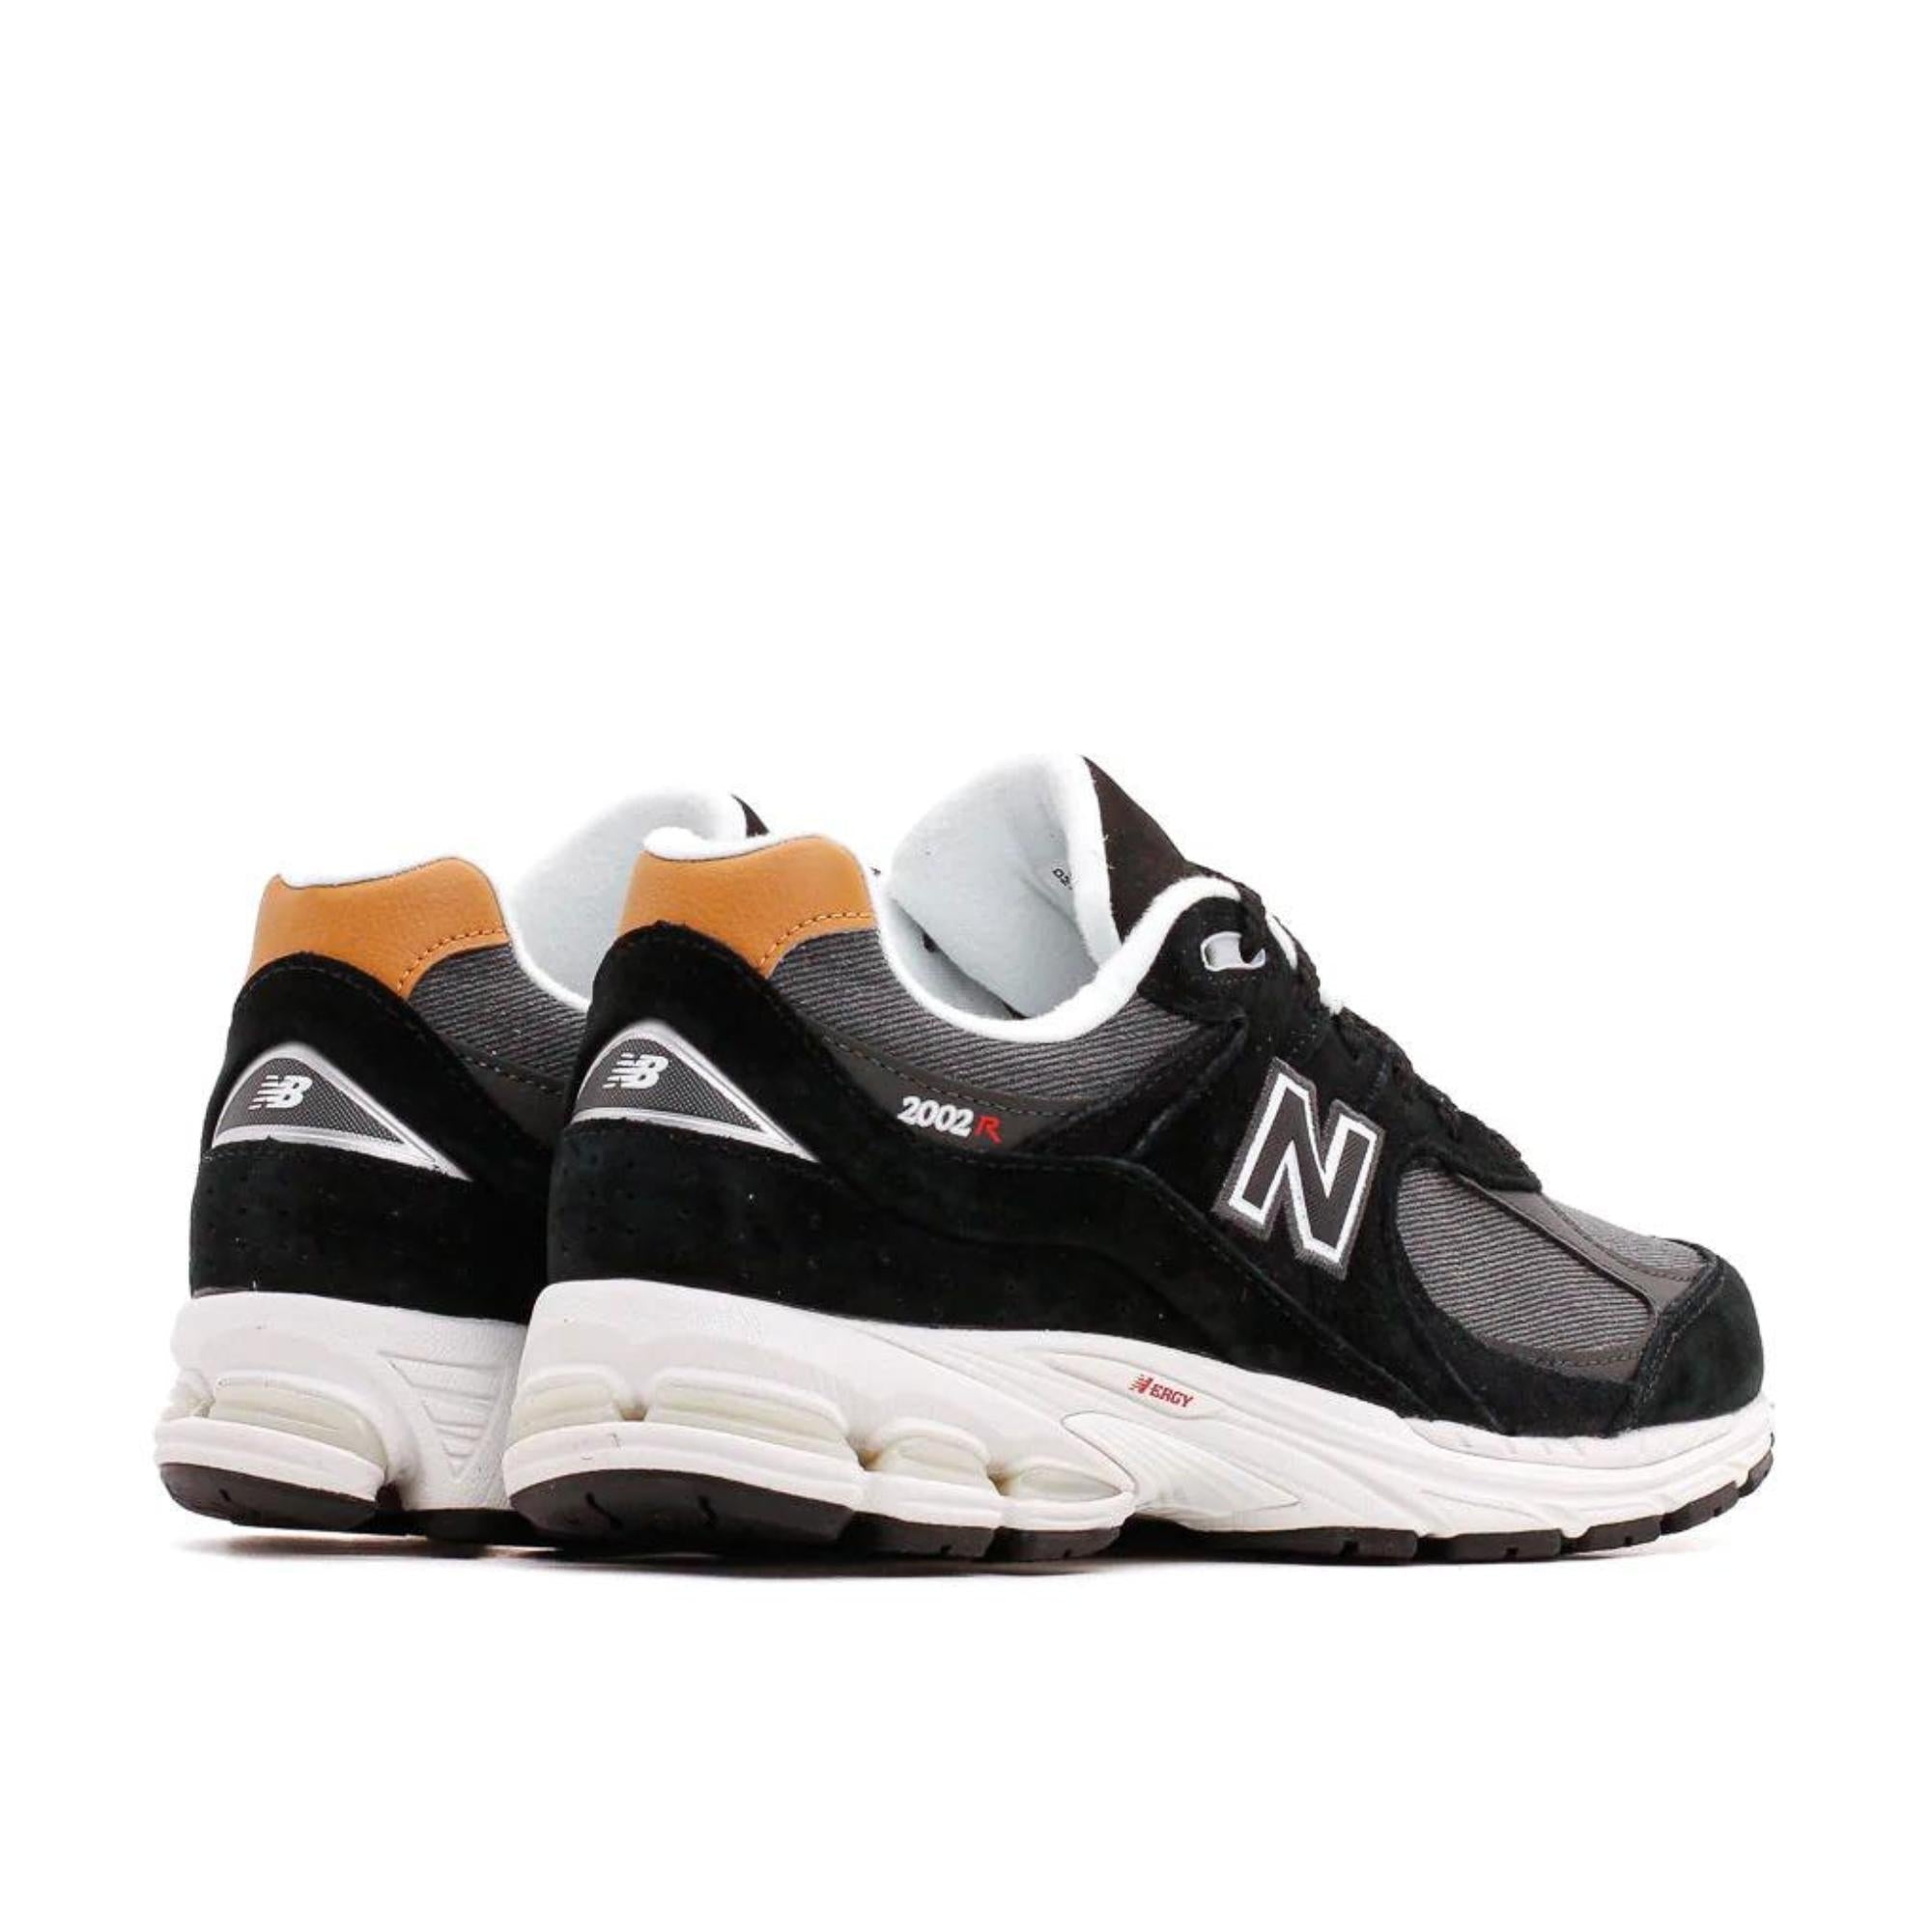 New Balance 2002Reb ’Black Cork’ Sneakers